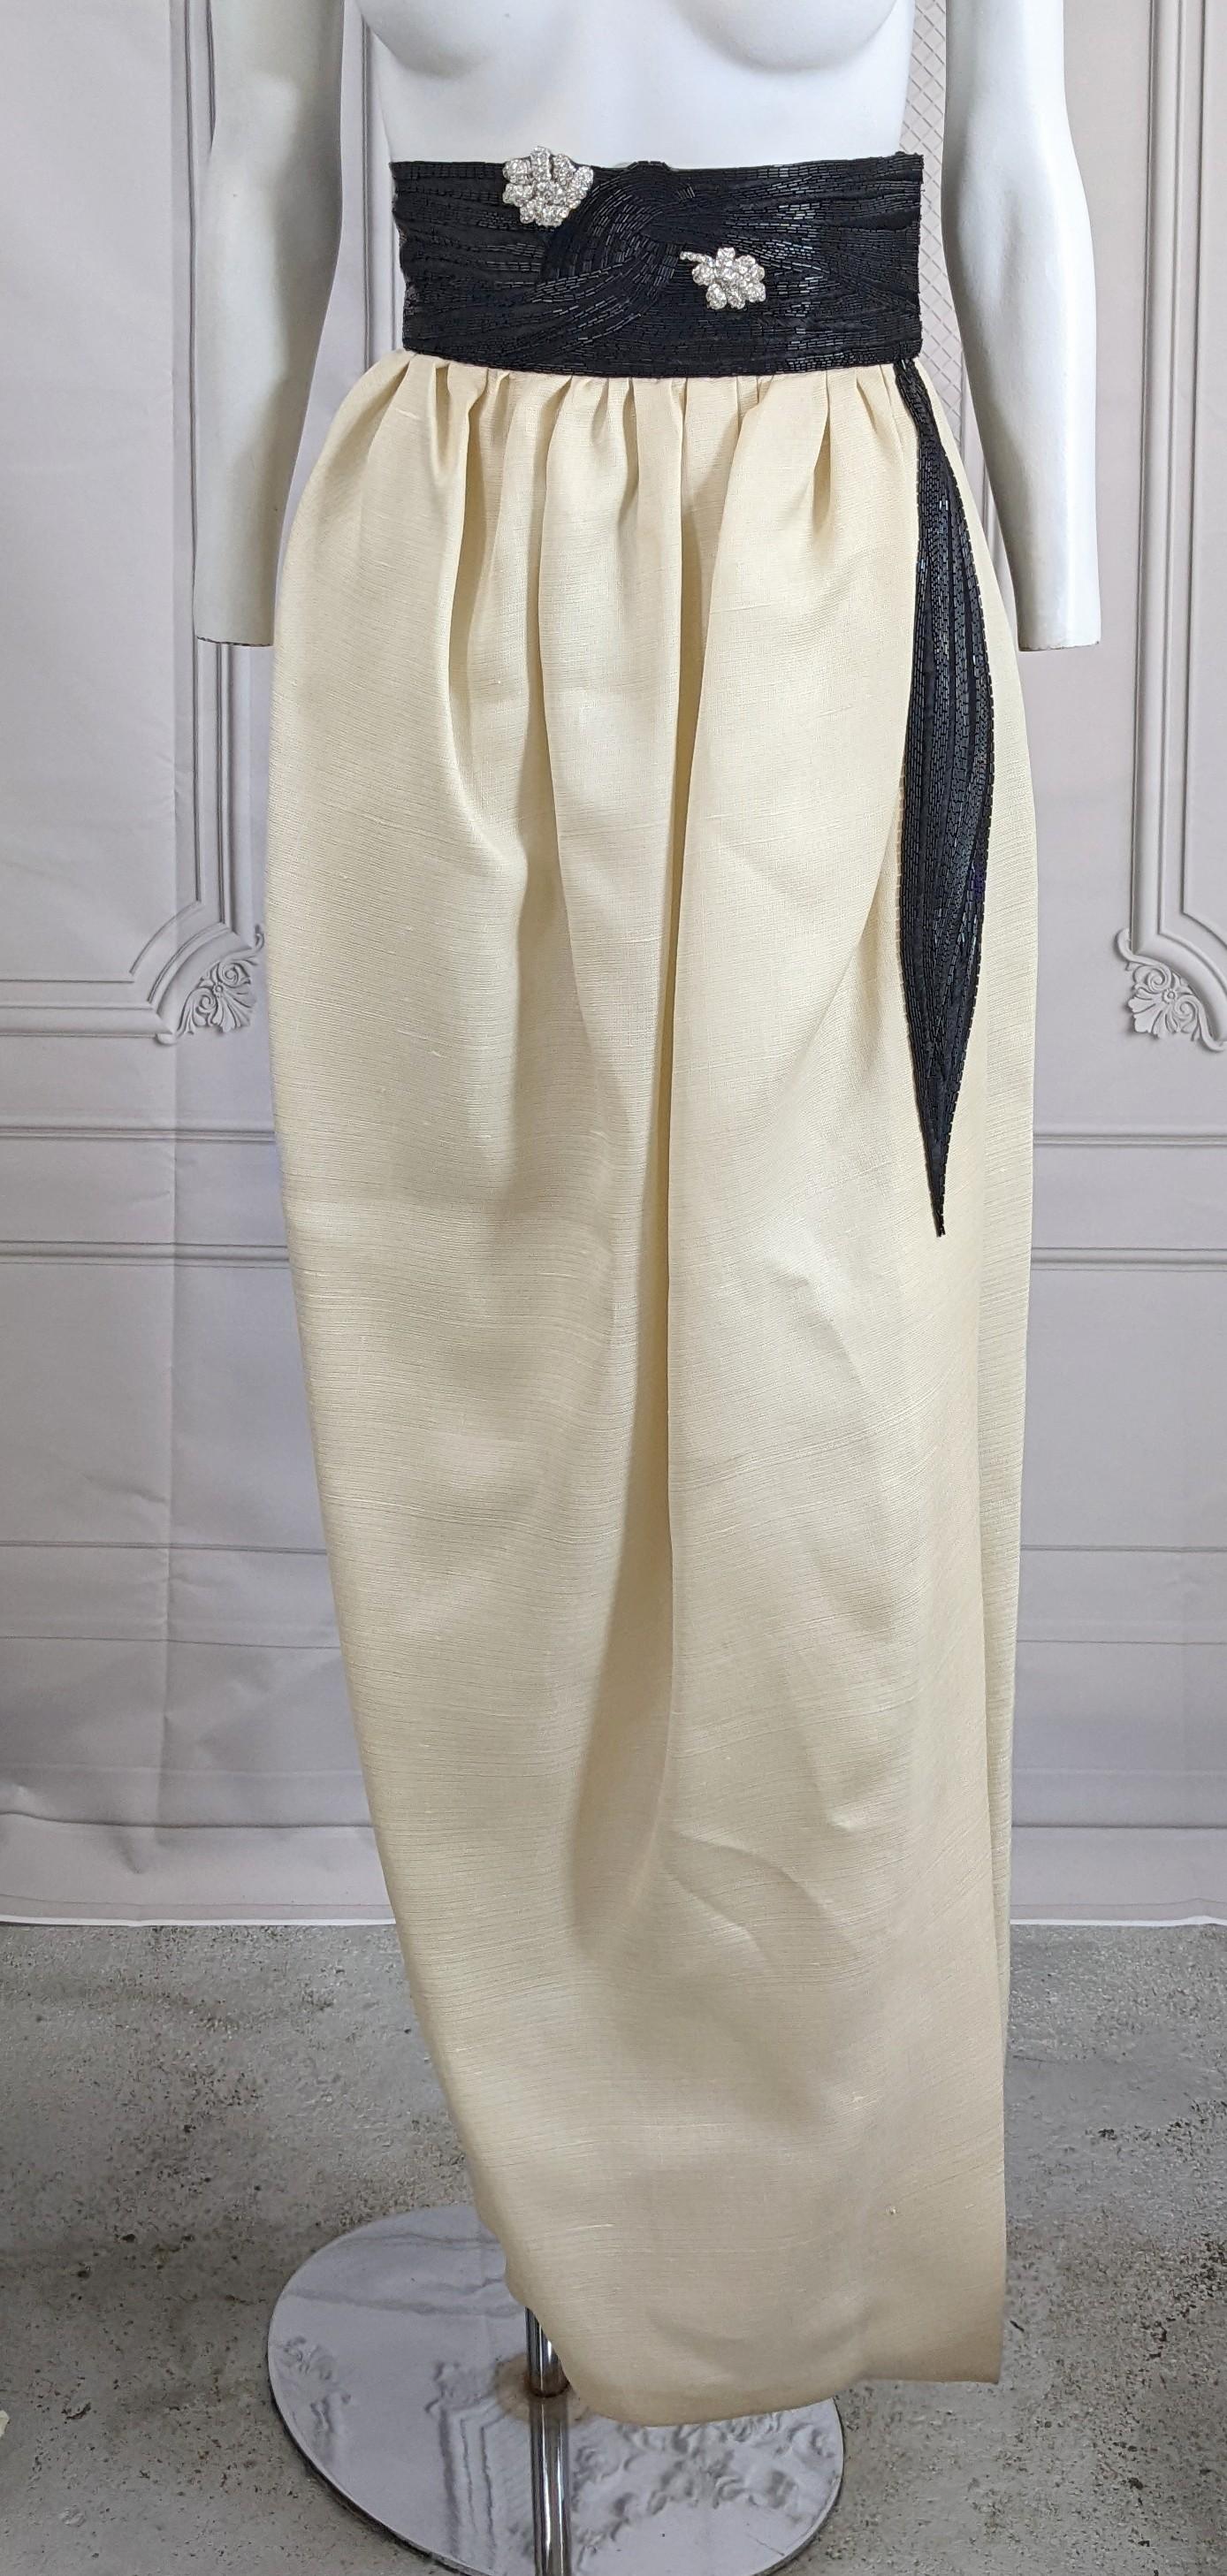 Dior Haute Couture Beaded Gazar Skirt 5